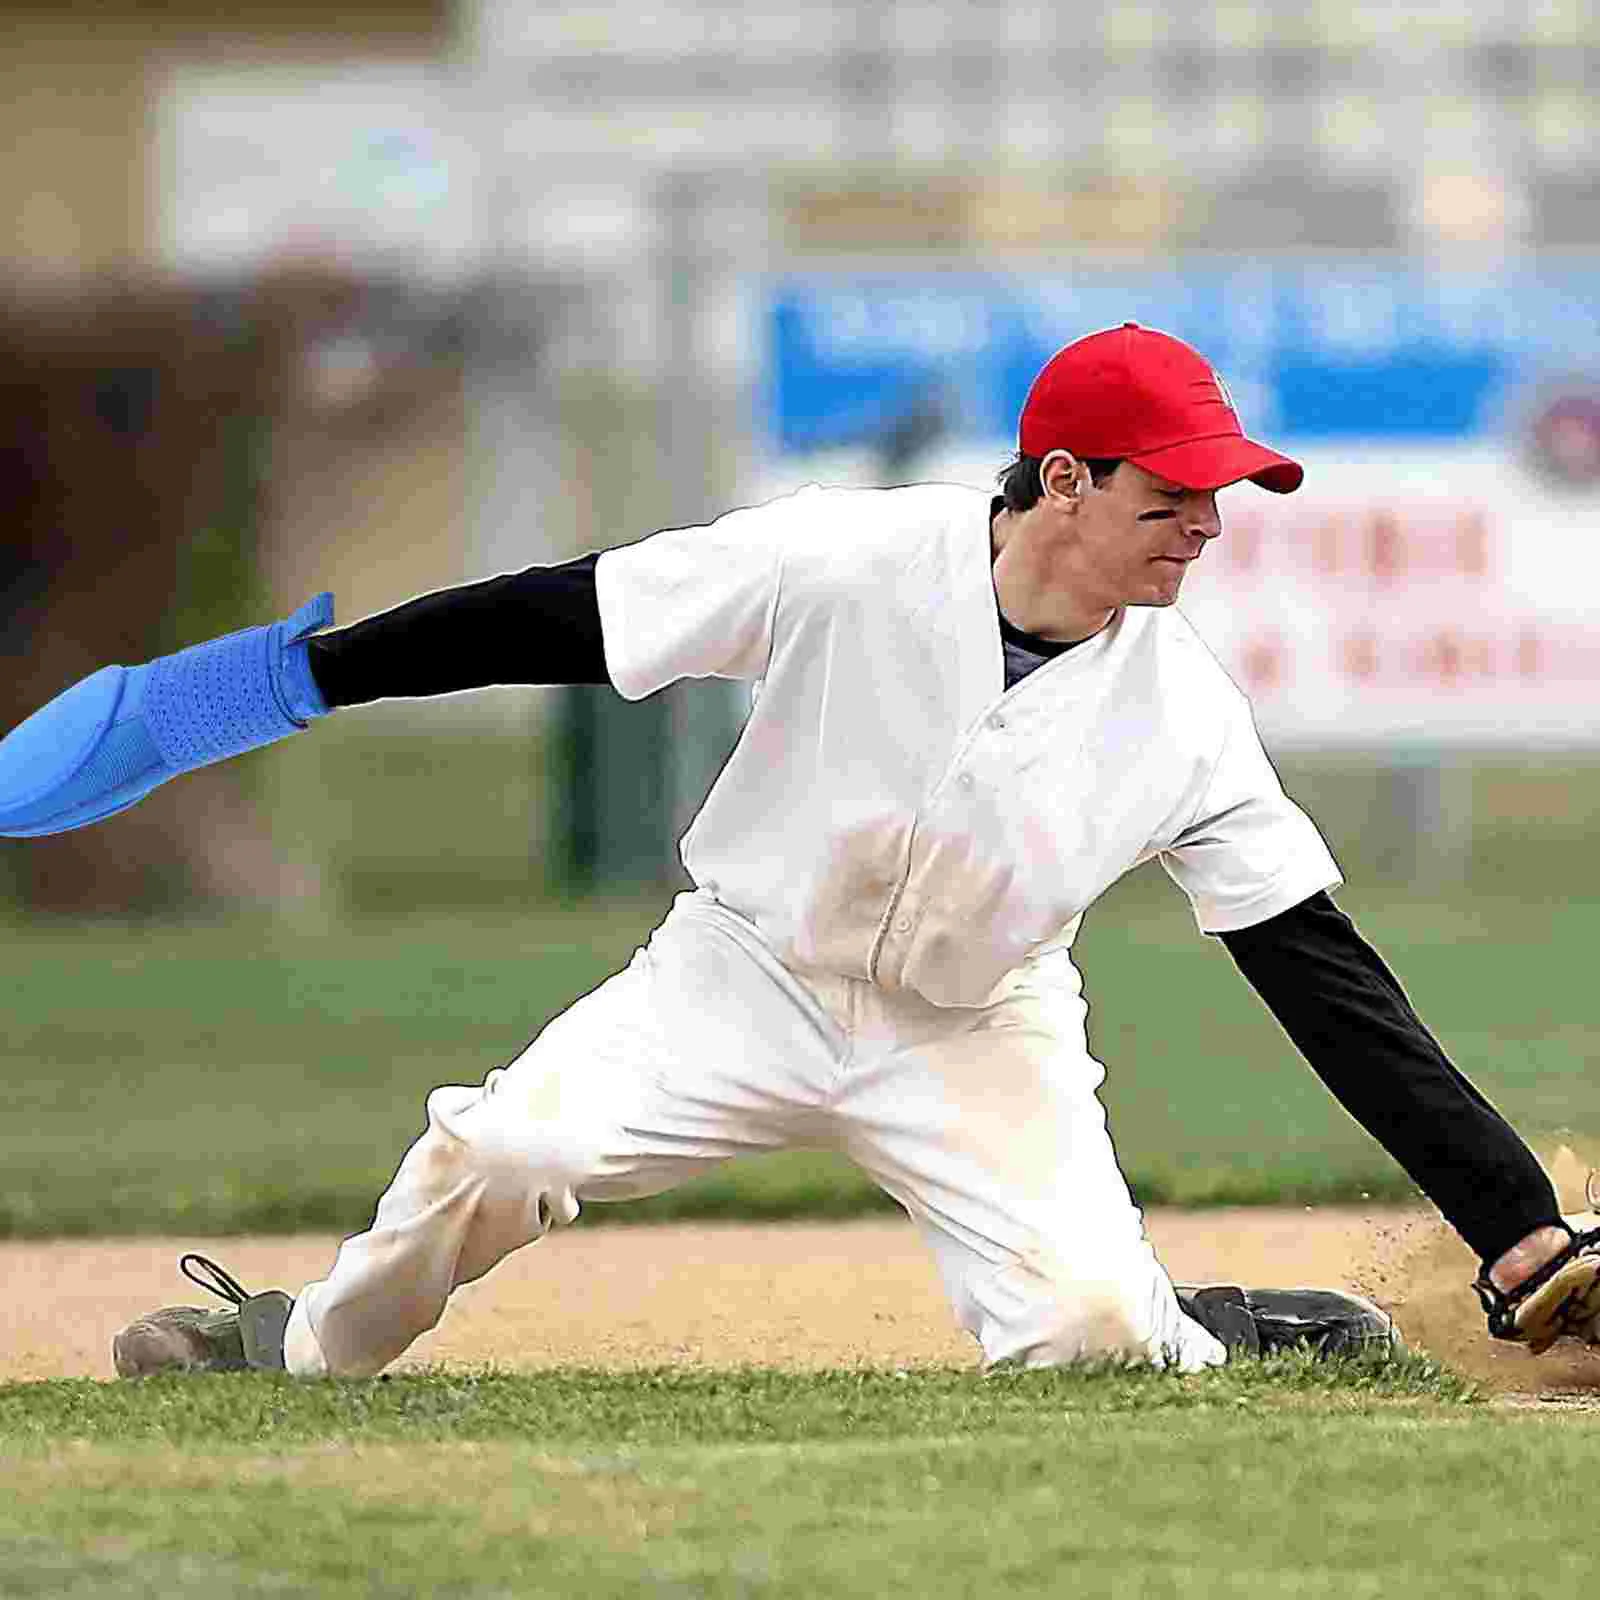 

Baseball Glove Compression Gloves Slide Sliding Mitts Running Training for Mitten